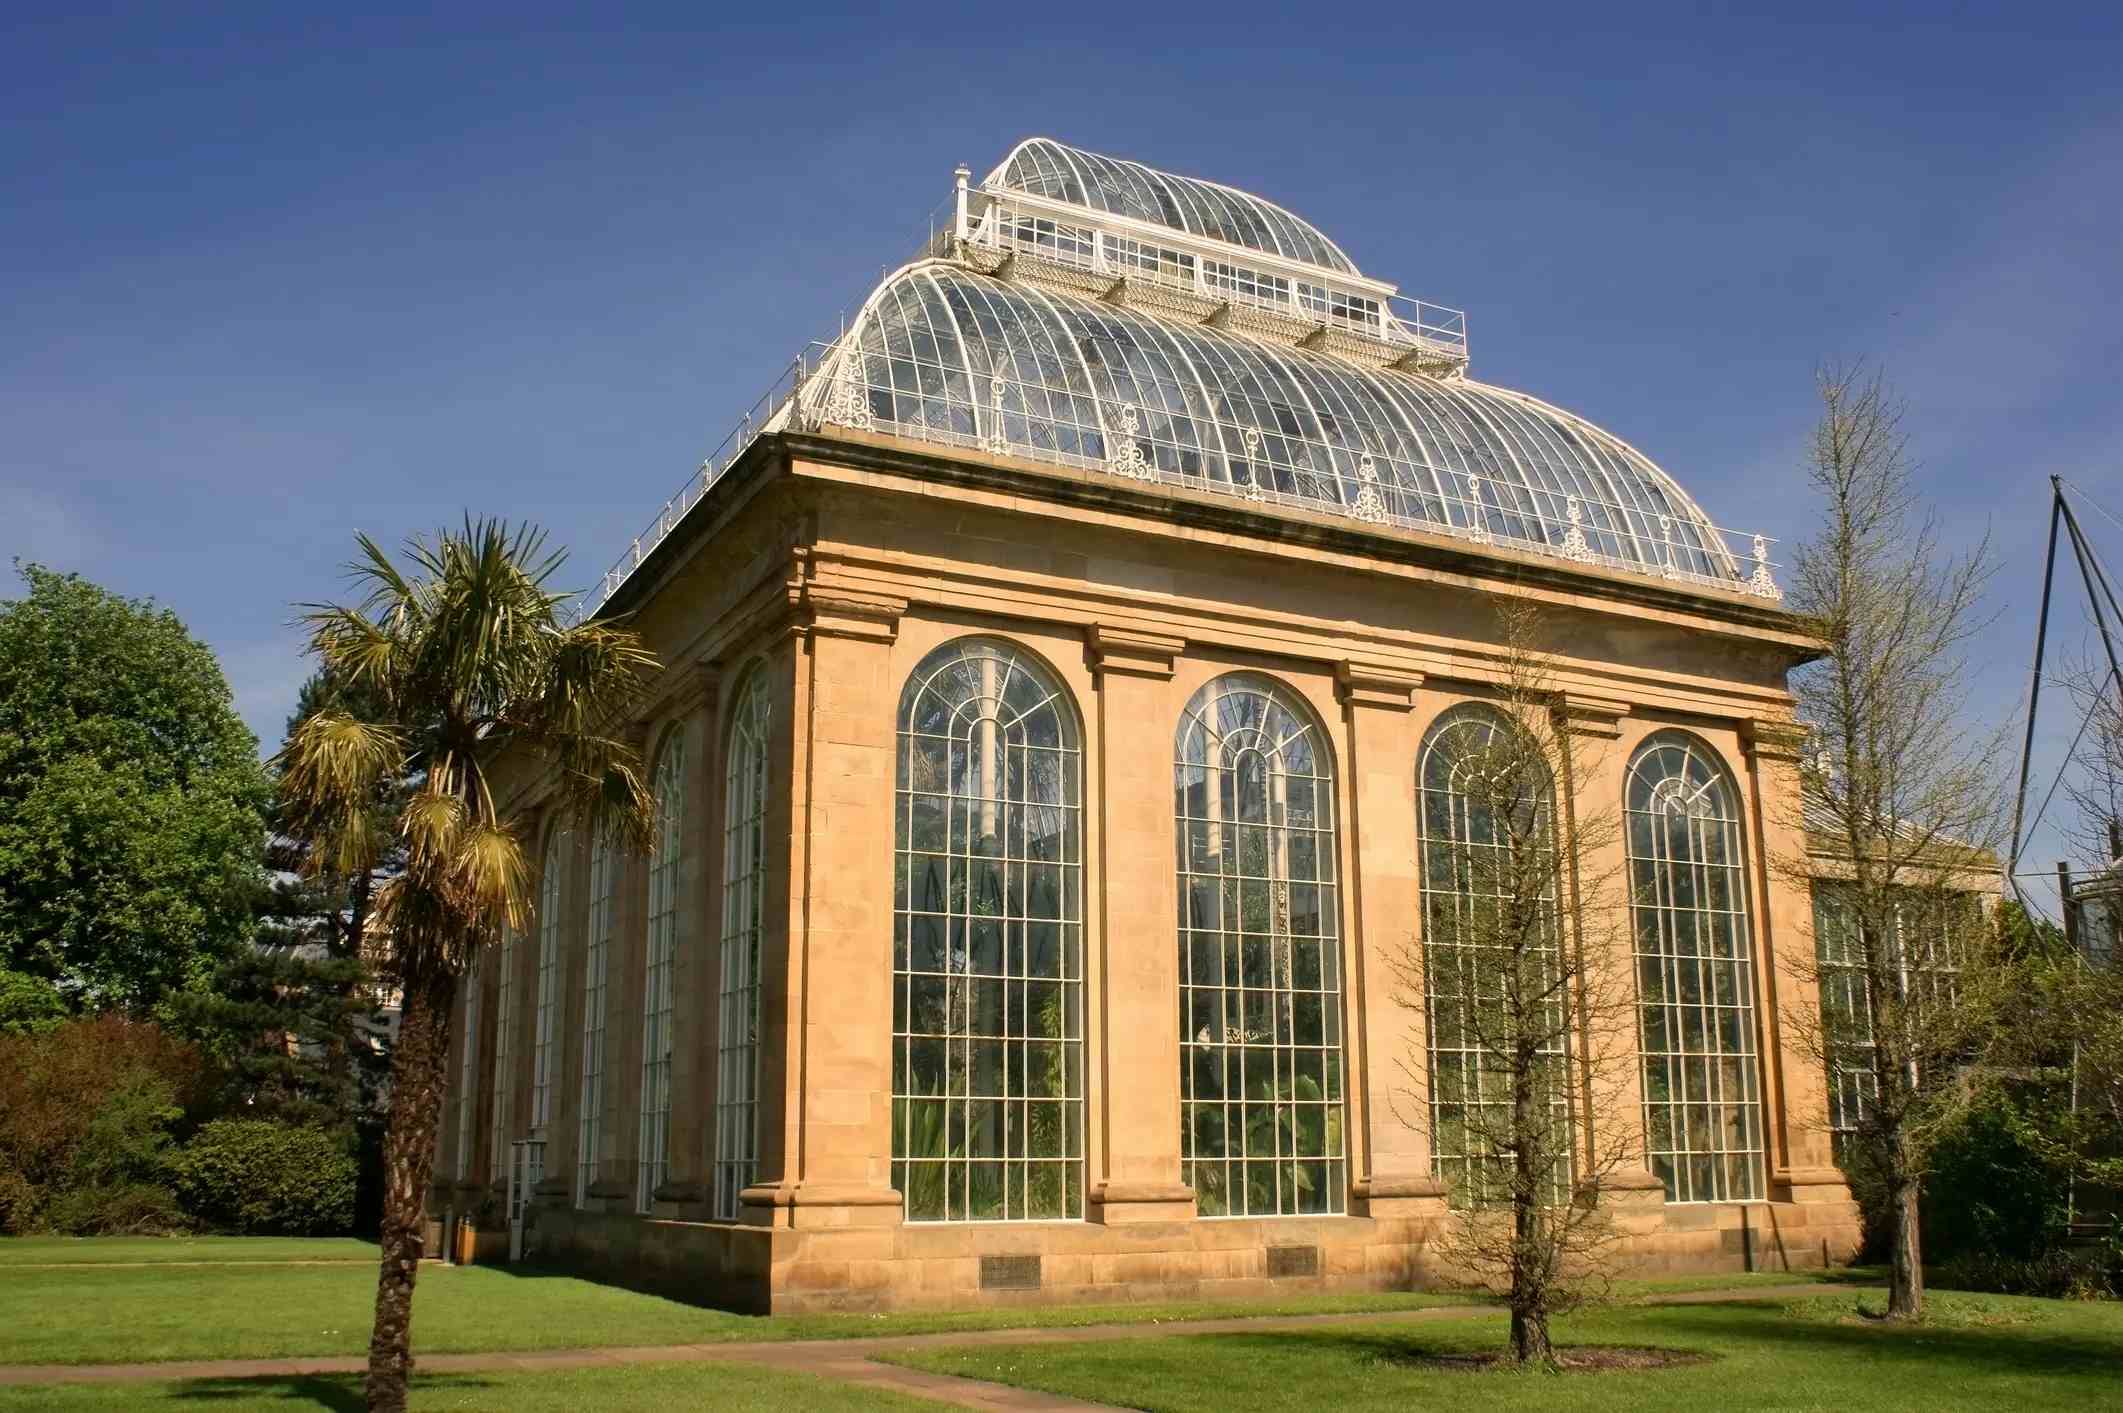 Royal Botanic Garden Edinburgh image